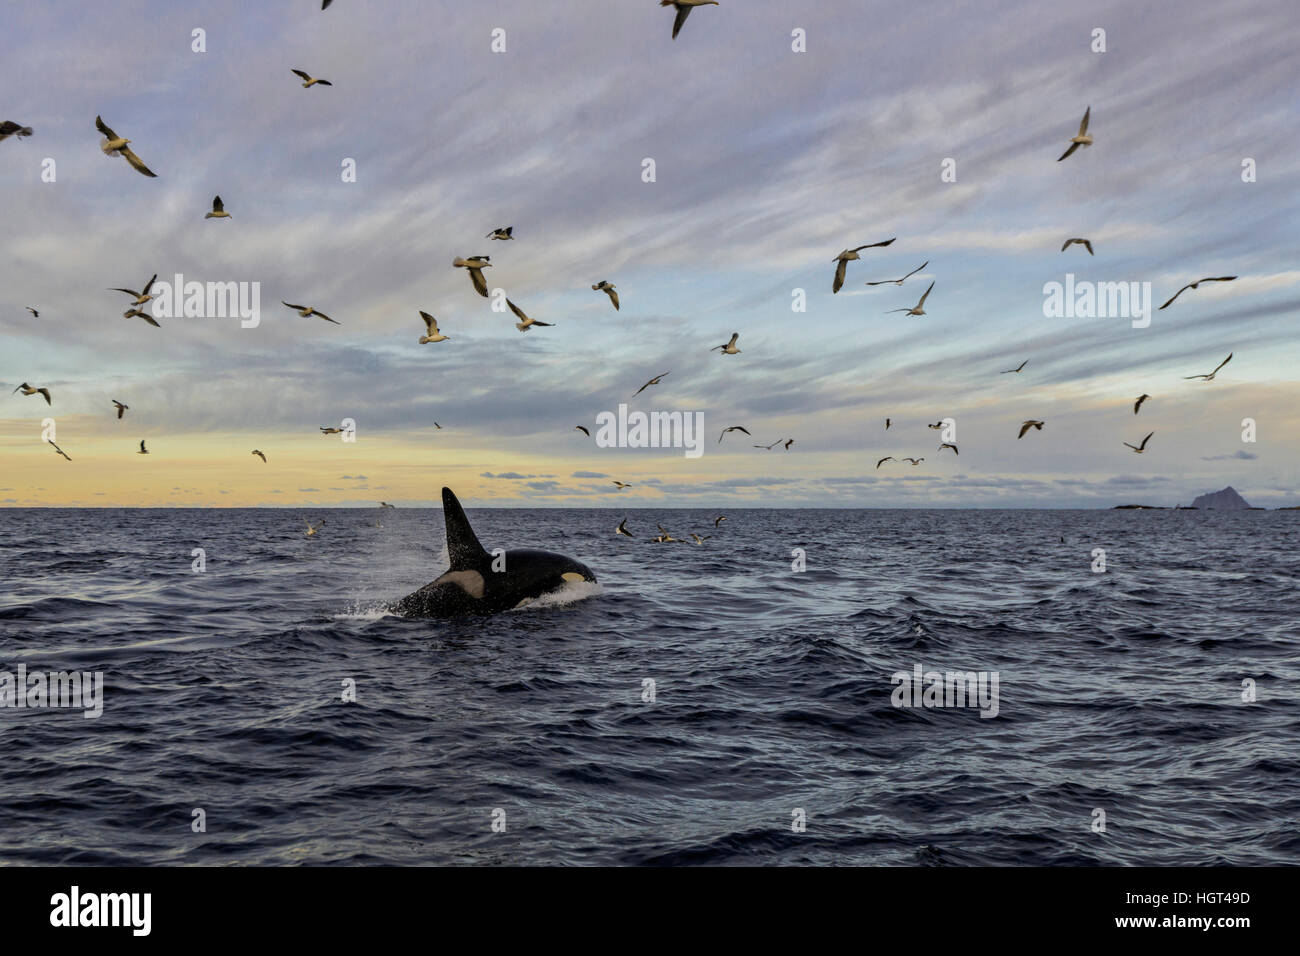 Gulls (Laridae) flying above orca or killer whale (Orcinus orca), Kaldfjorden, Norway Stock Photo